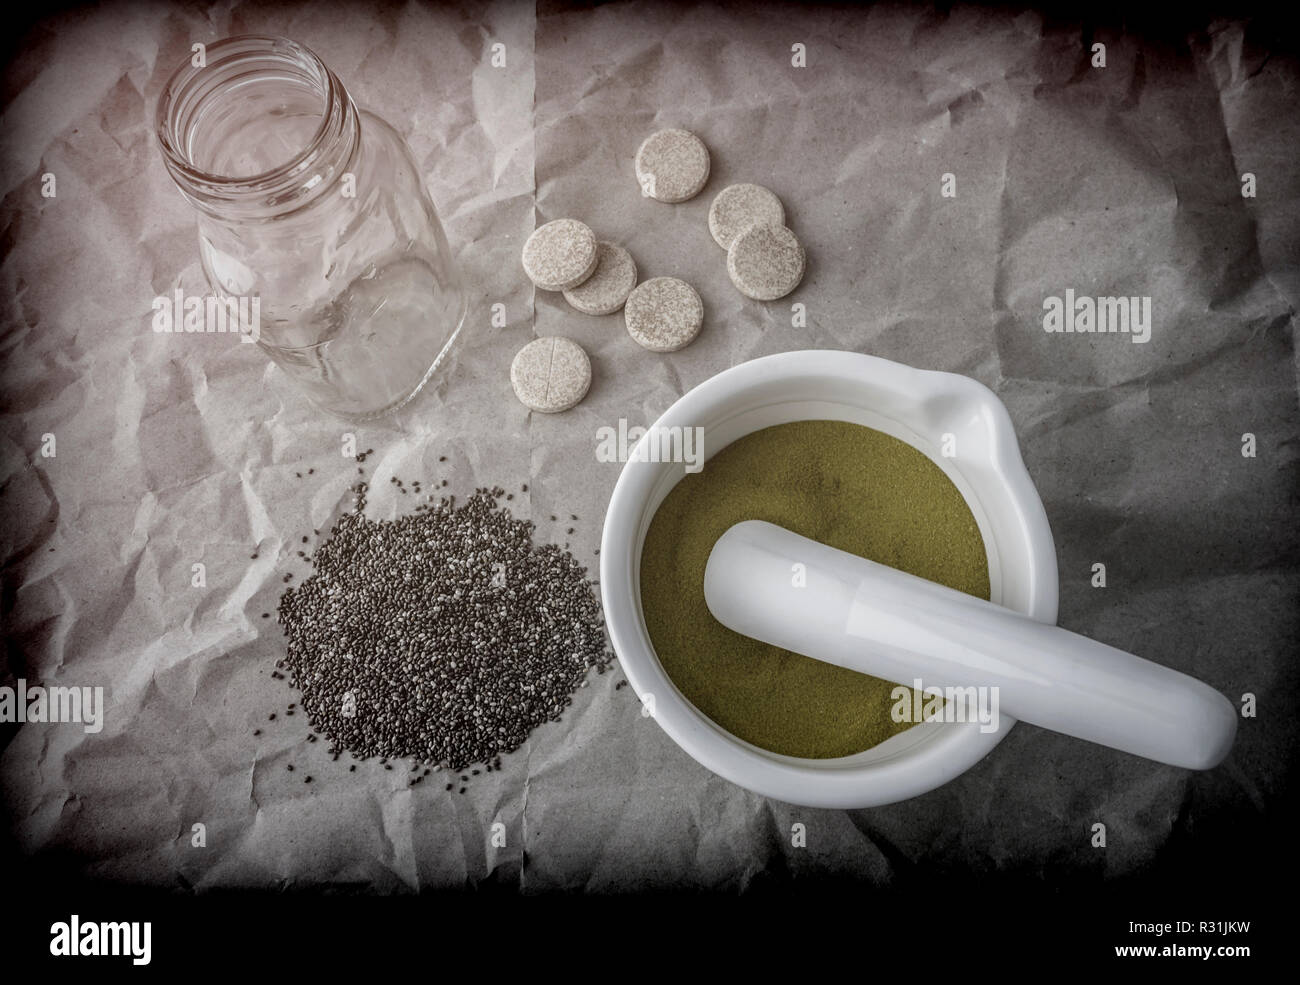 Elaboration of traditional medicine, conceptual image Stock Photo